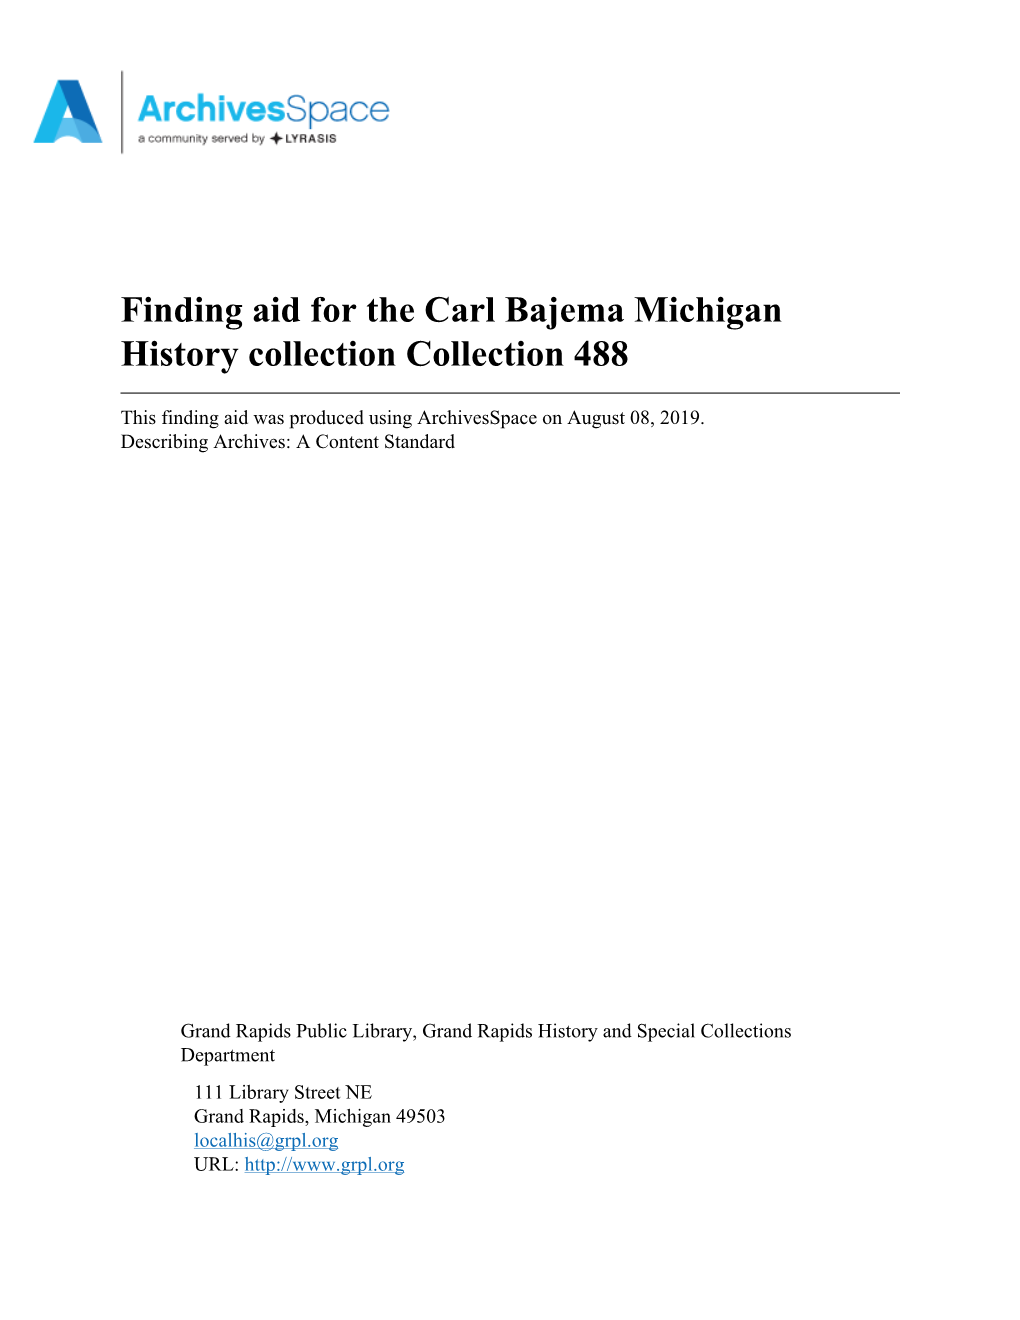 Carl Bajema Michigan History Collection Collection 488